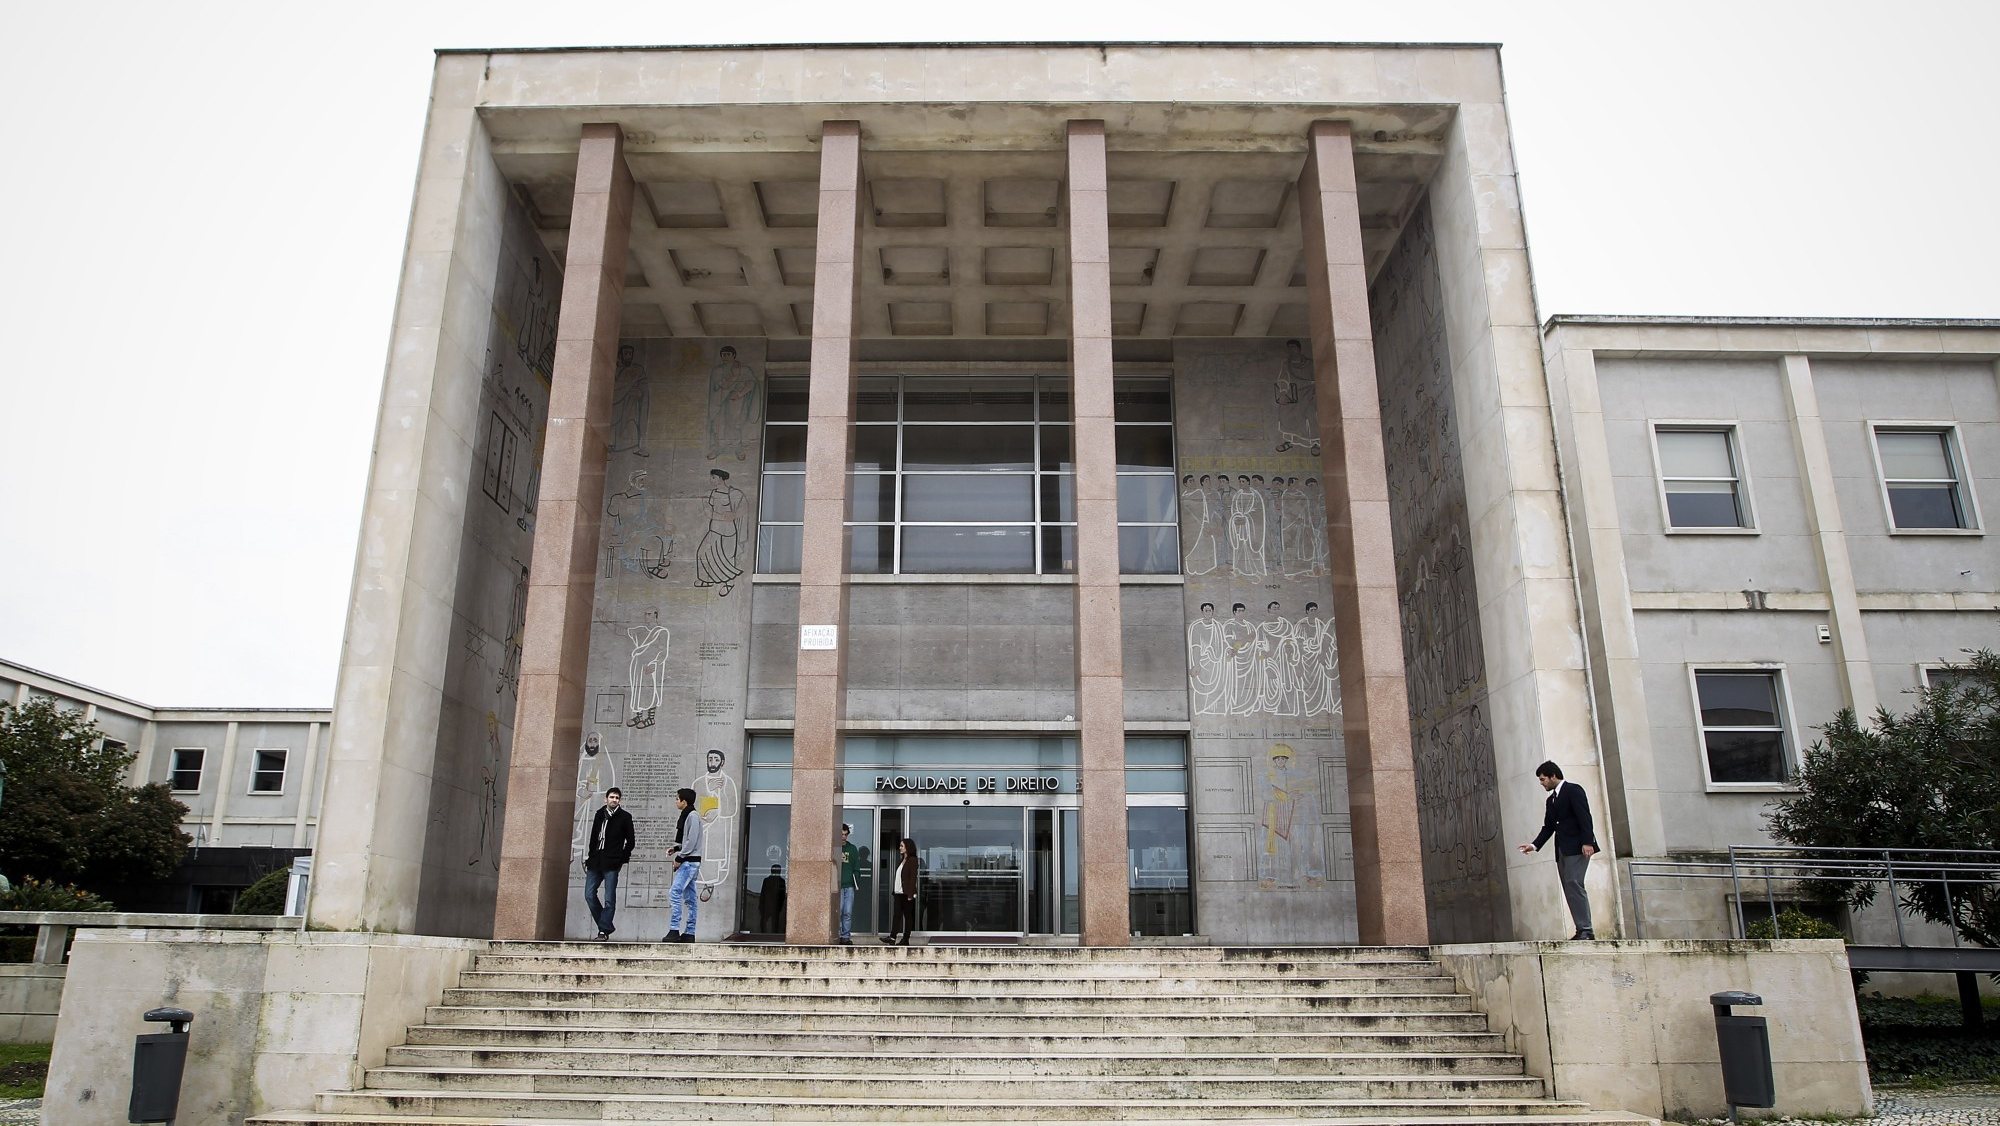 Fachada do edifício da Faculdade de Direito da Universidade de Lisboa